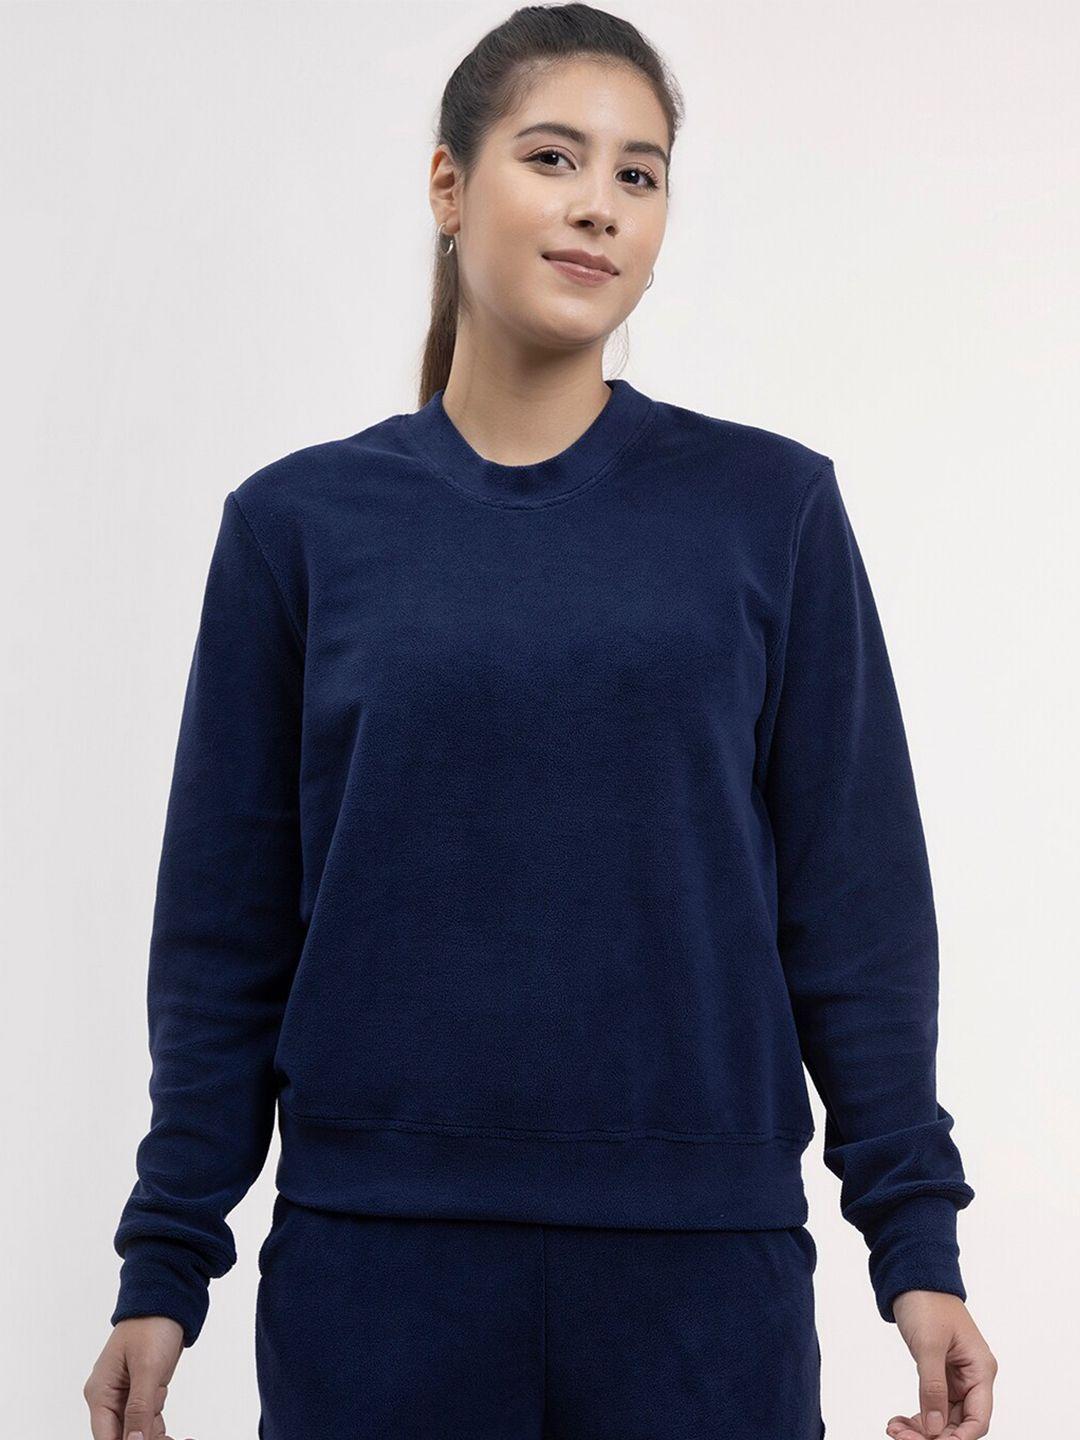 fablestreet-women-navy-blue-solid-velour-sweatshirt